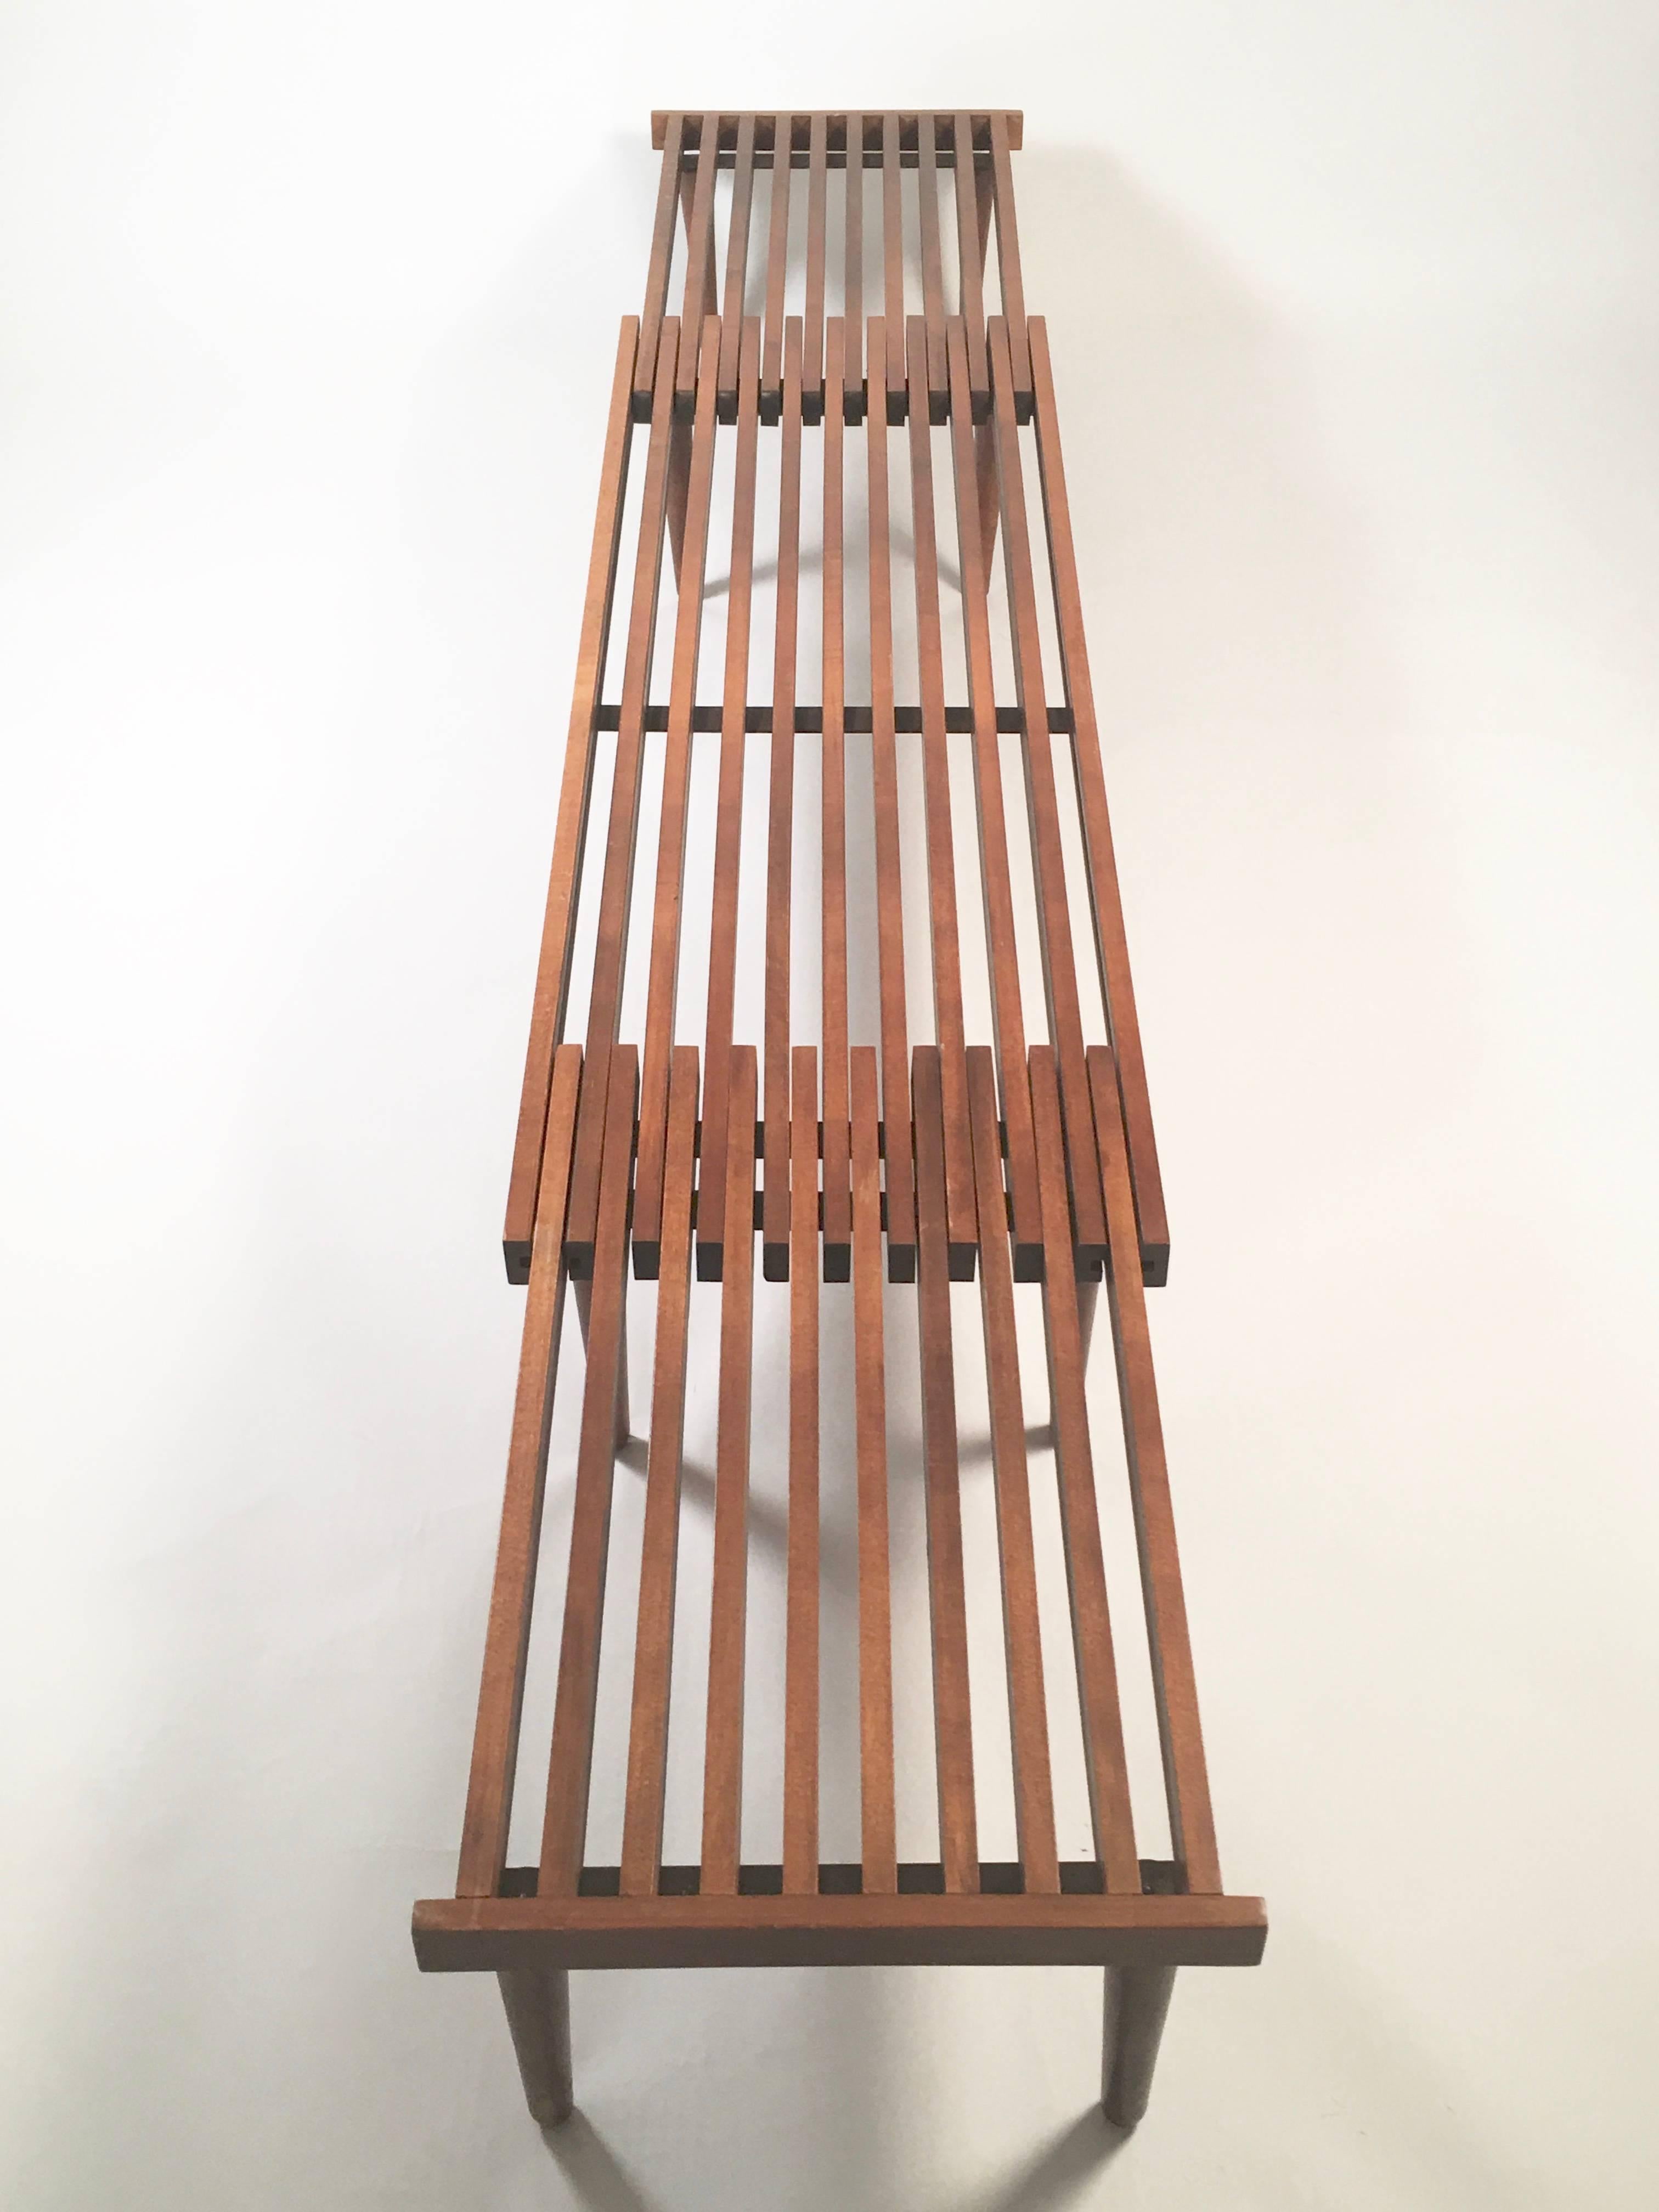 American Mid-Century Slat Wood Bench or Coffee Table, Adjustable Length